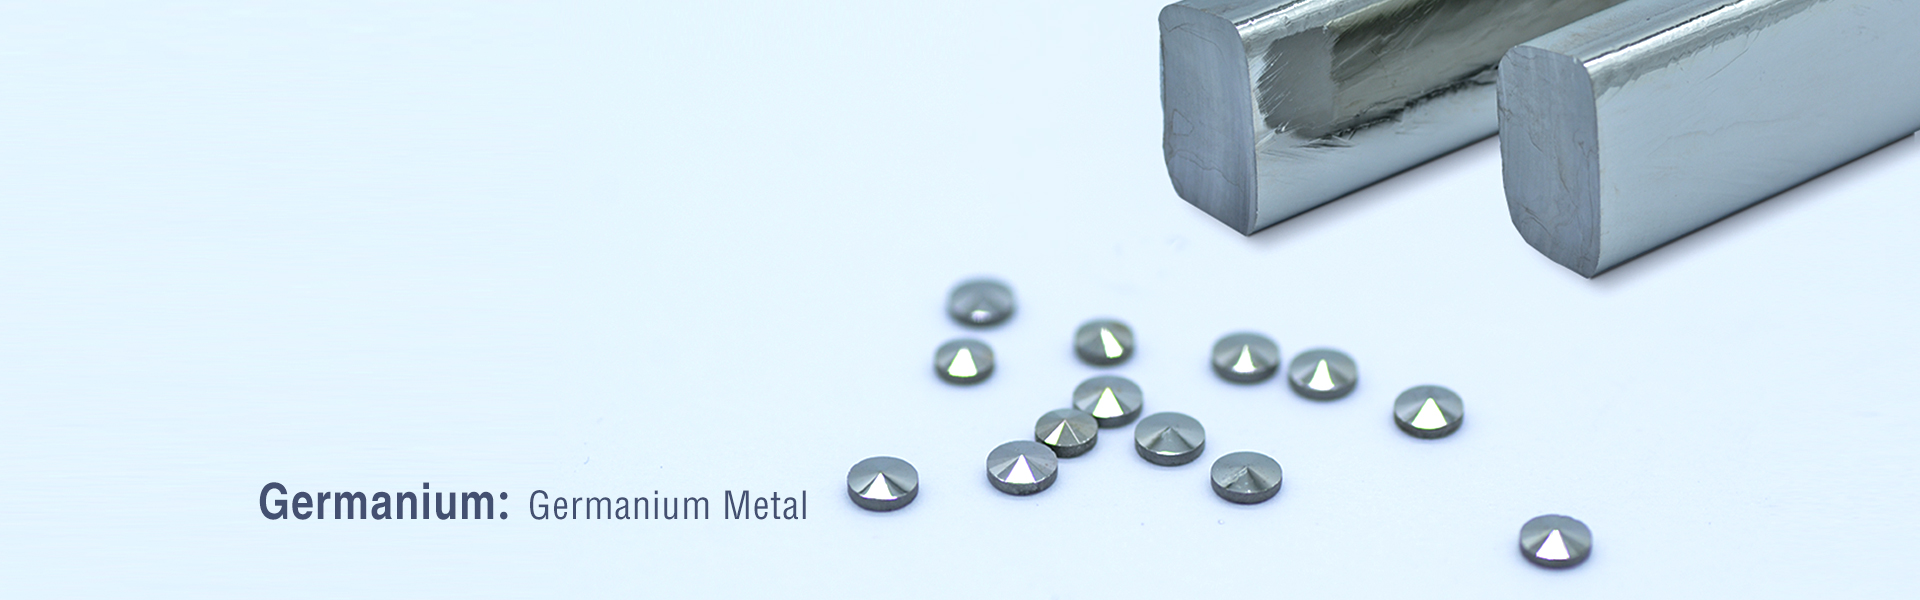 Germanium Metal